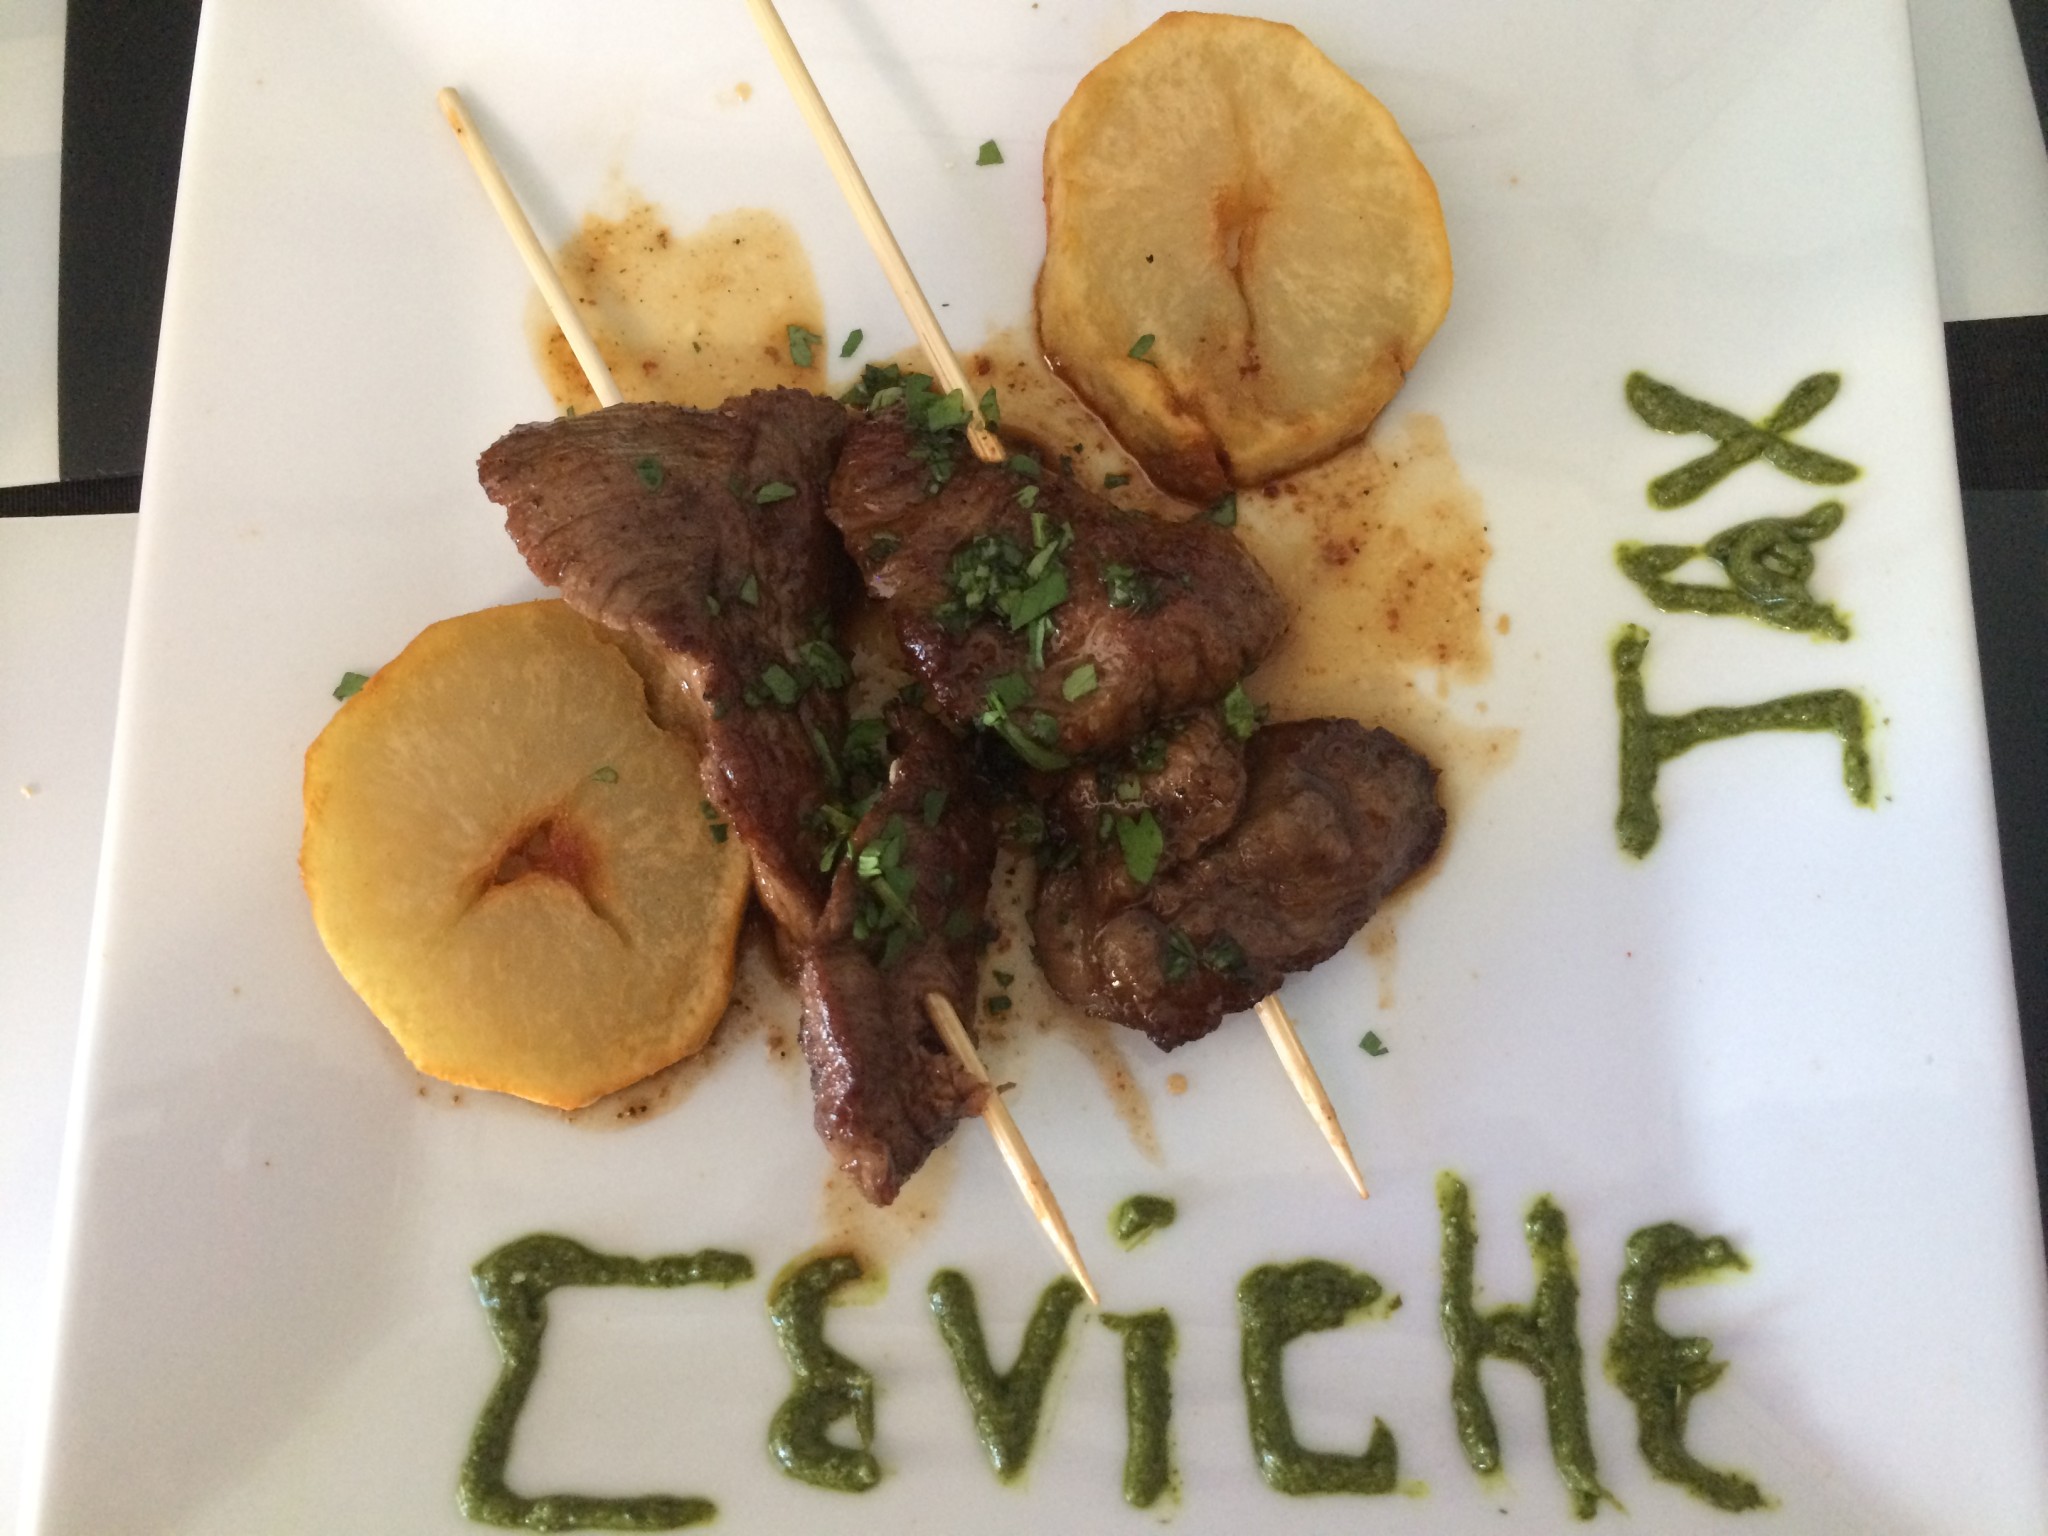 Ceviche - Anticuchos Appetizer